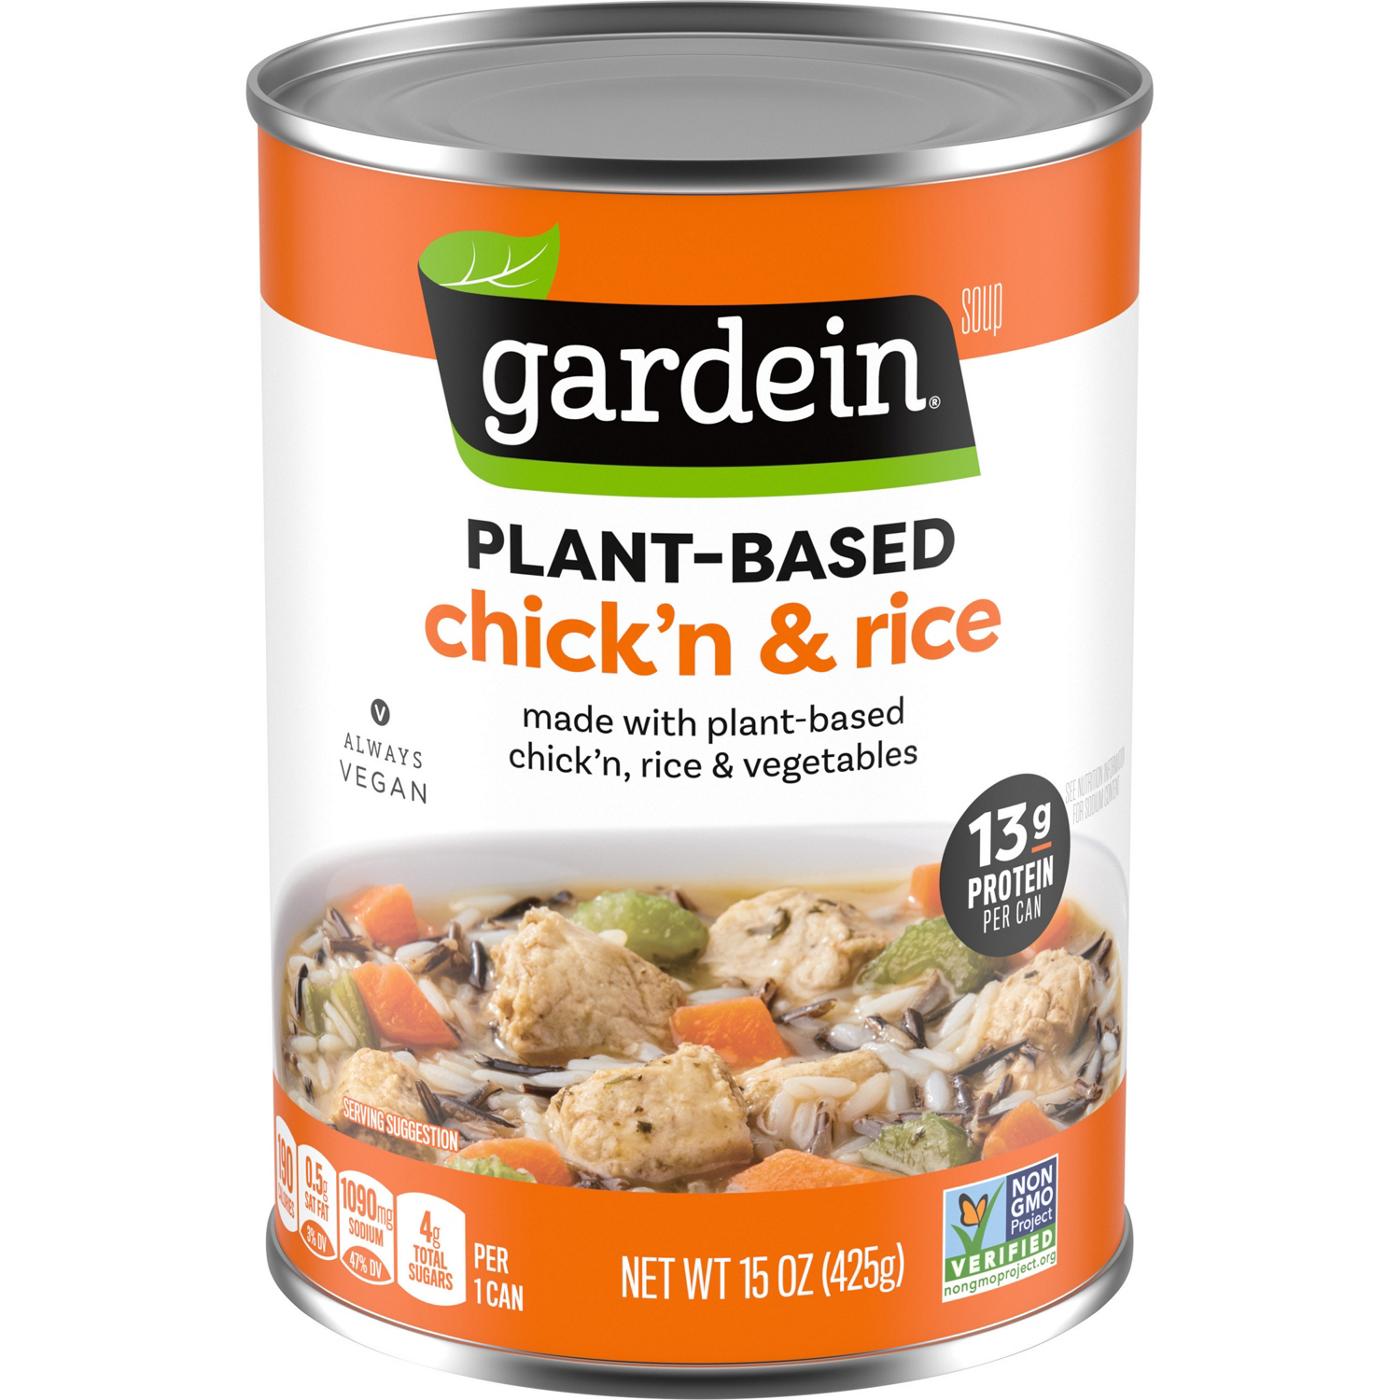 Gardein Vegan Plant-Based Chick'n & Rice Soup; image 1 of 6